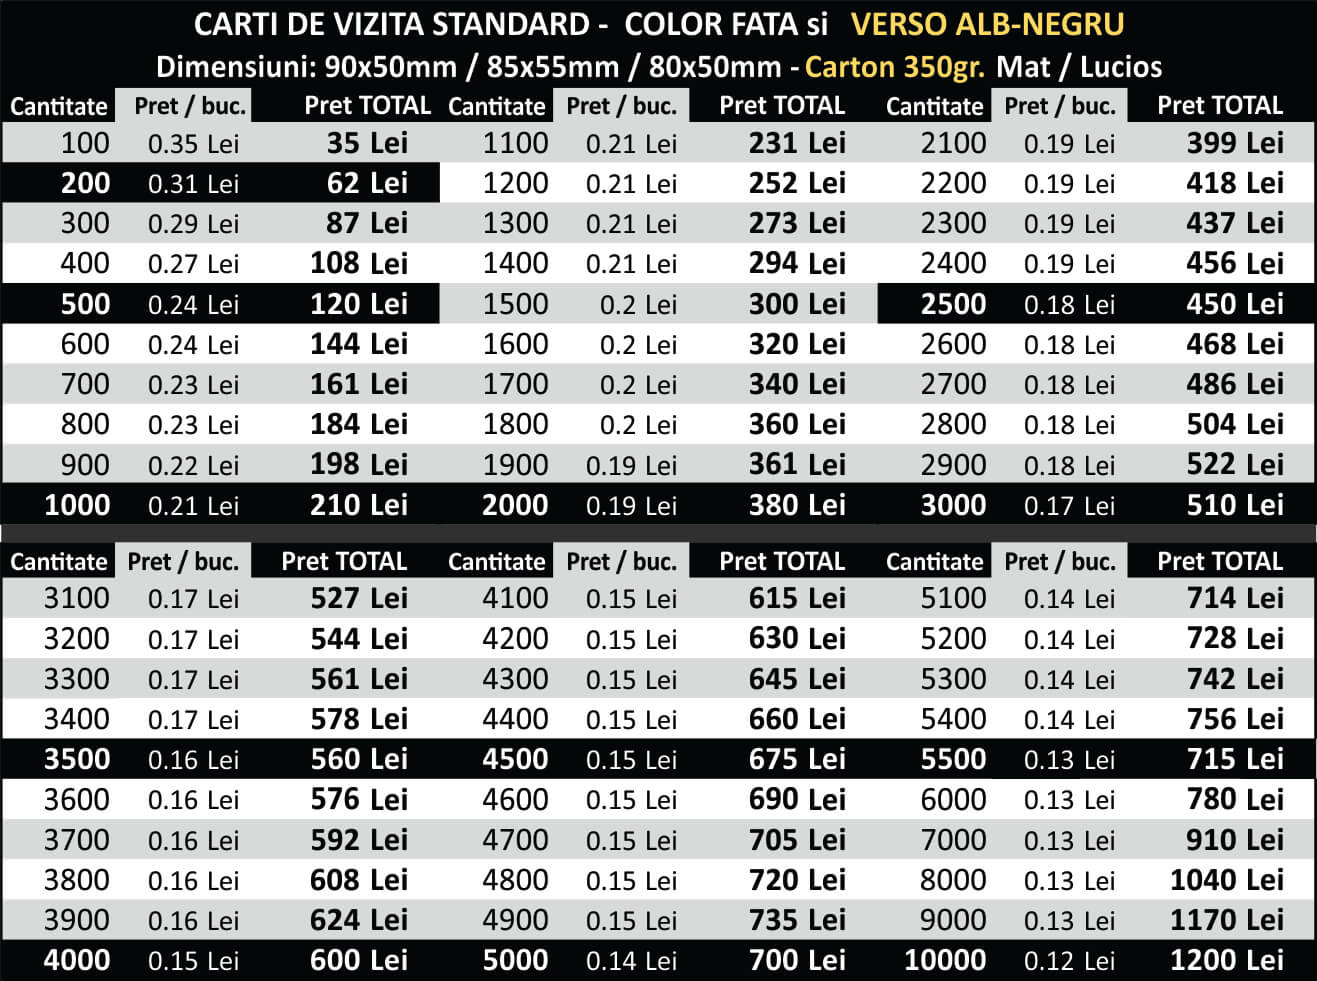 PRETURI Carti de vizita ieftine - actualizate - Color fata verso alb negru 350gr - CDVi